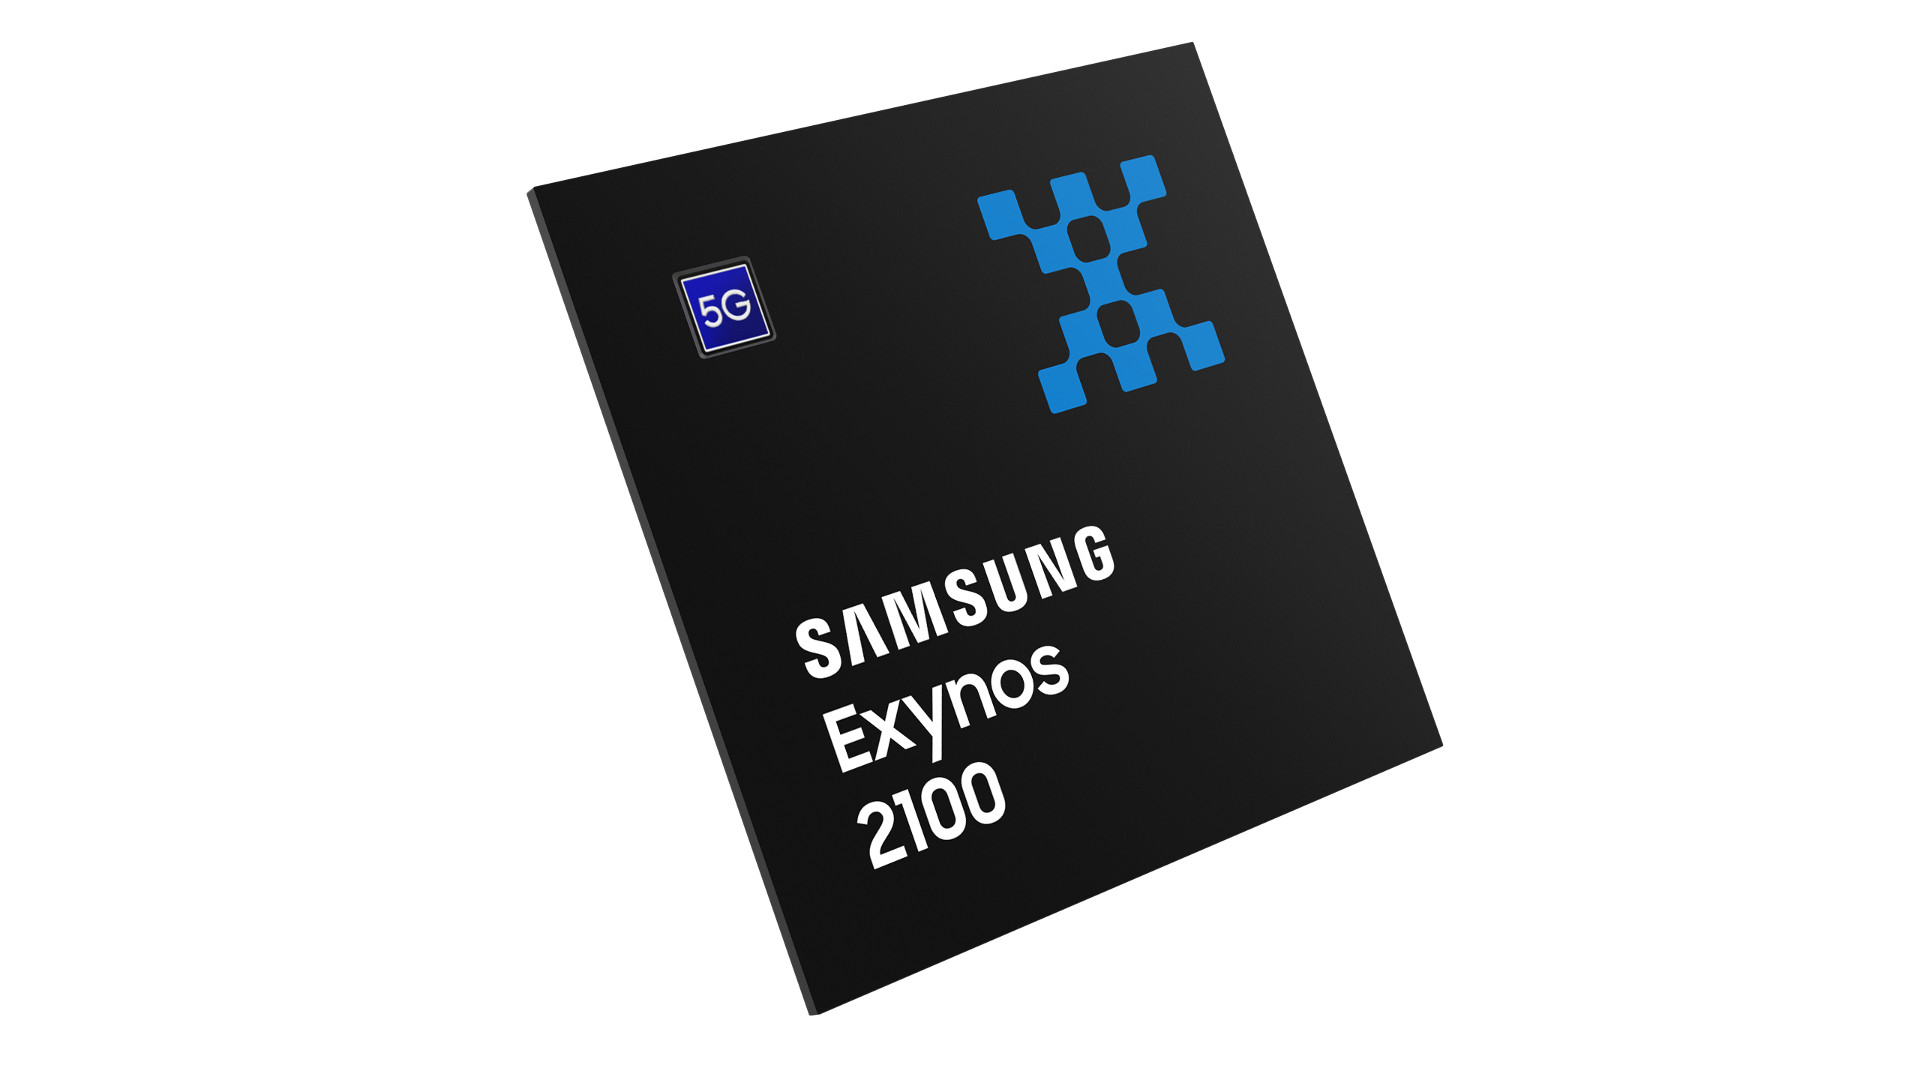 Samsung Exynos 2100 graphic